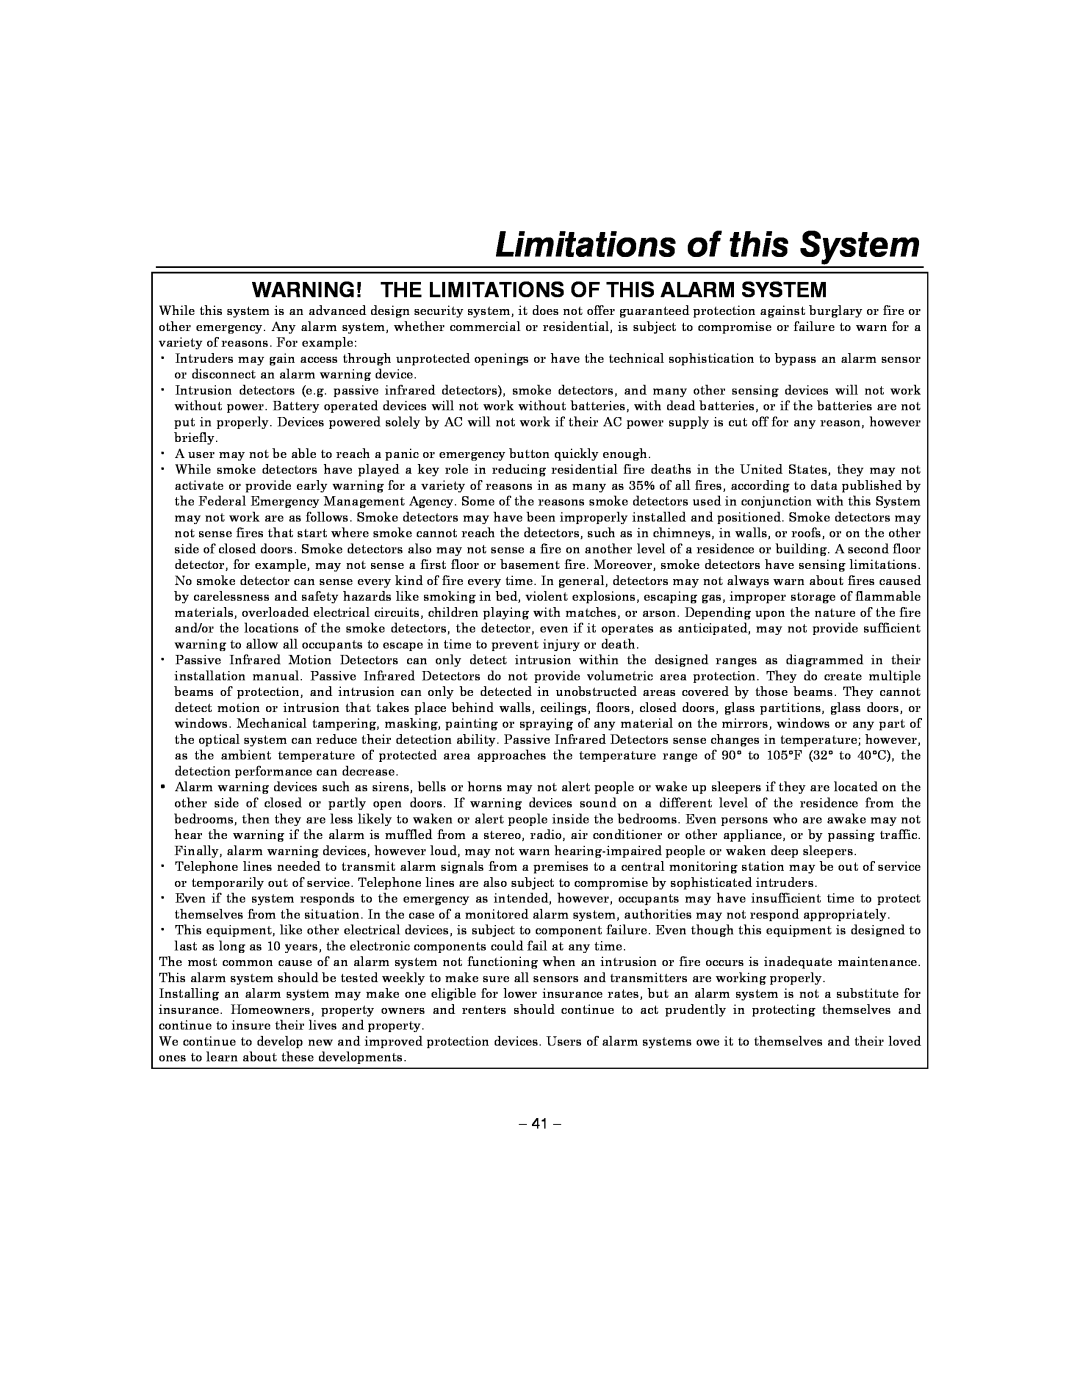 Honeywell 4110XM manual Limitations of this System, Warning! The Limitations Of This Alarm System 